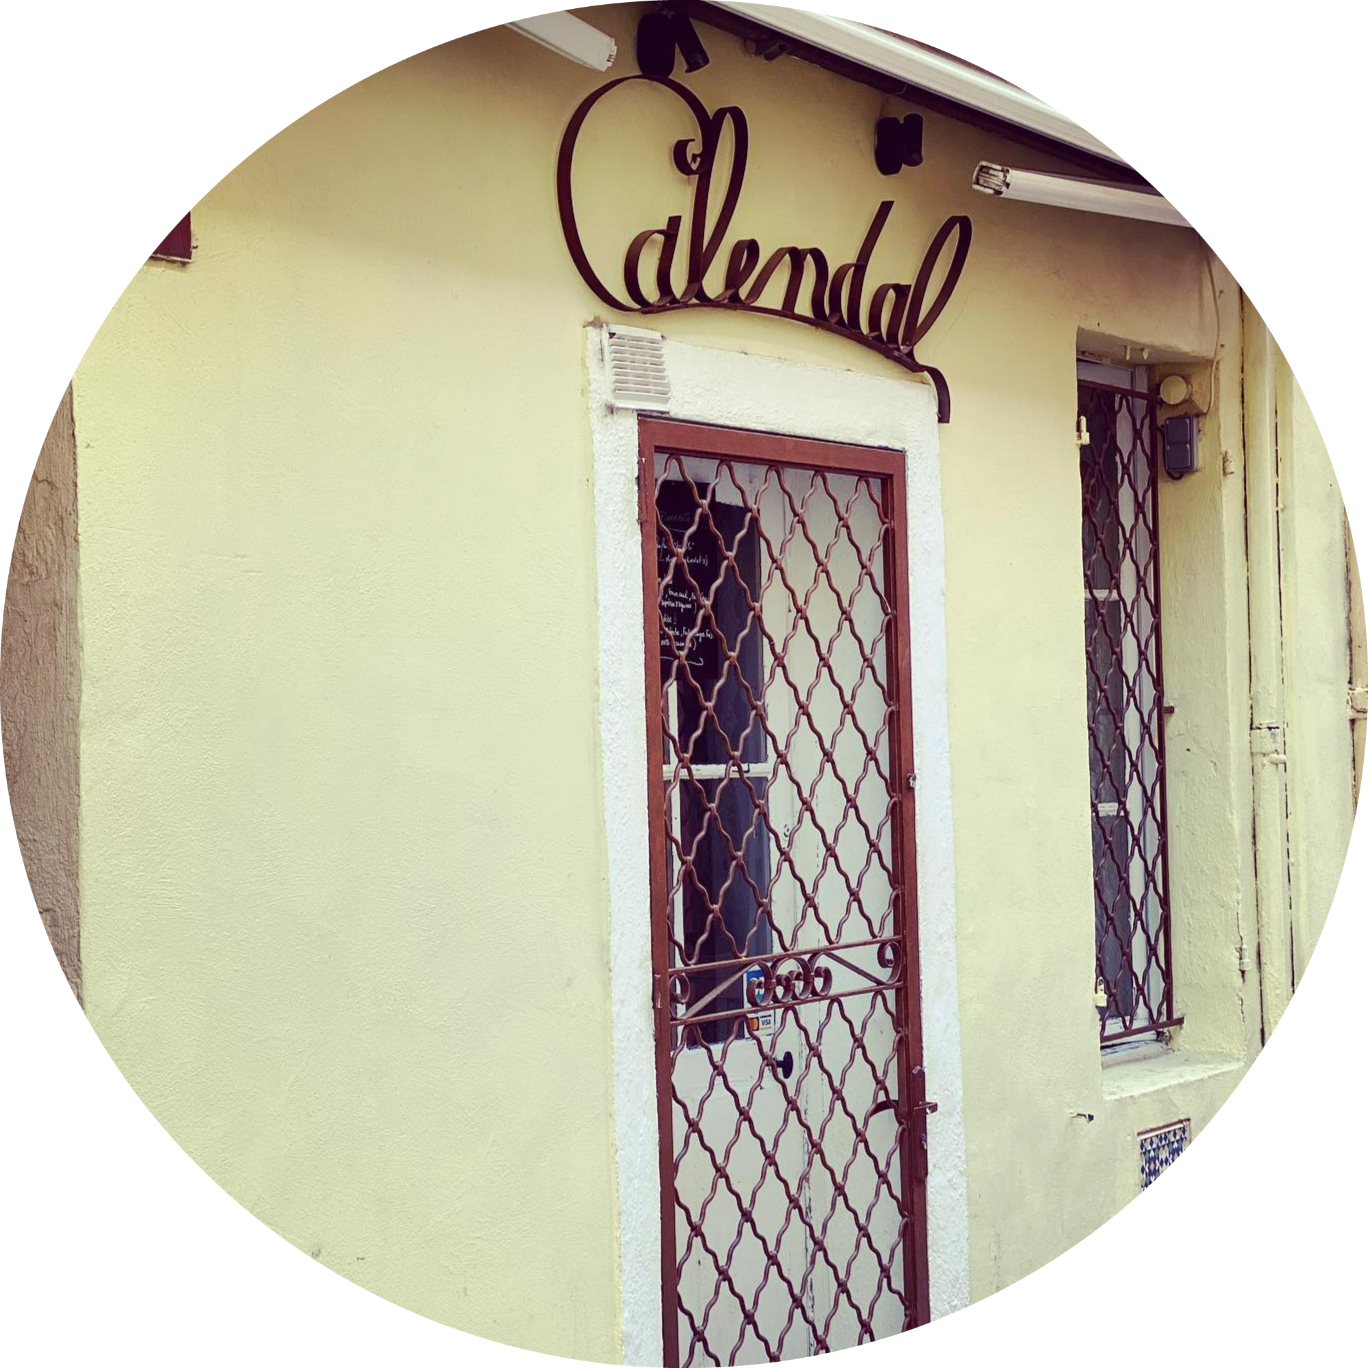 Restaurant_le_calendal